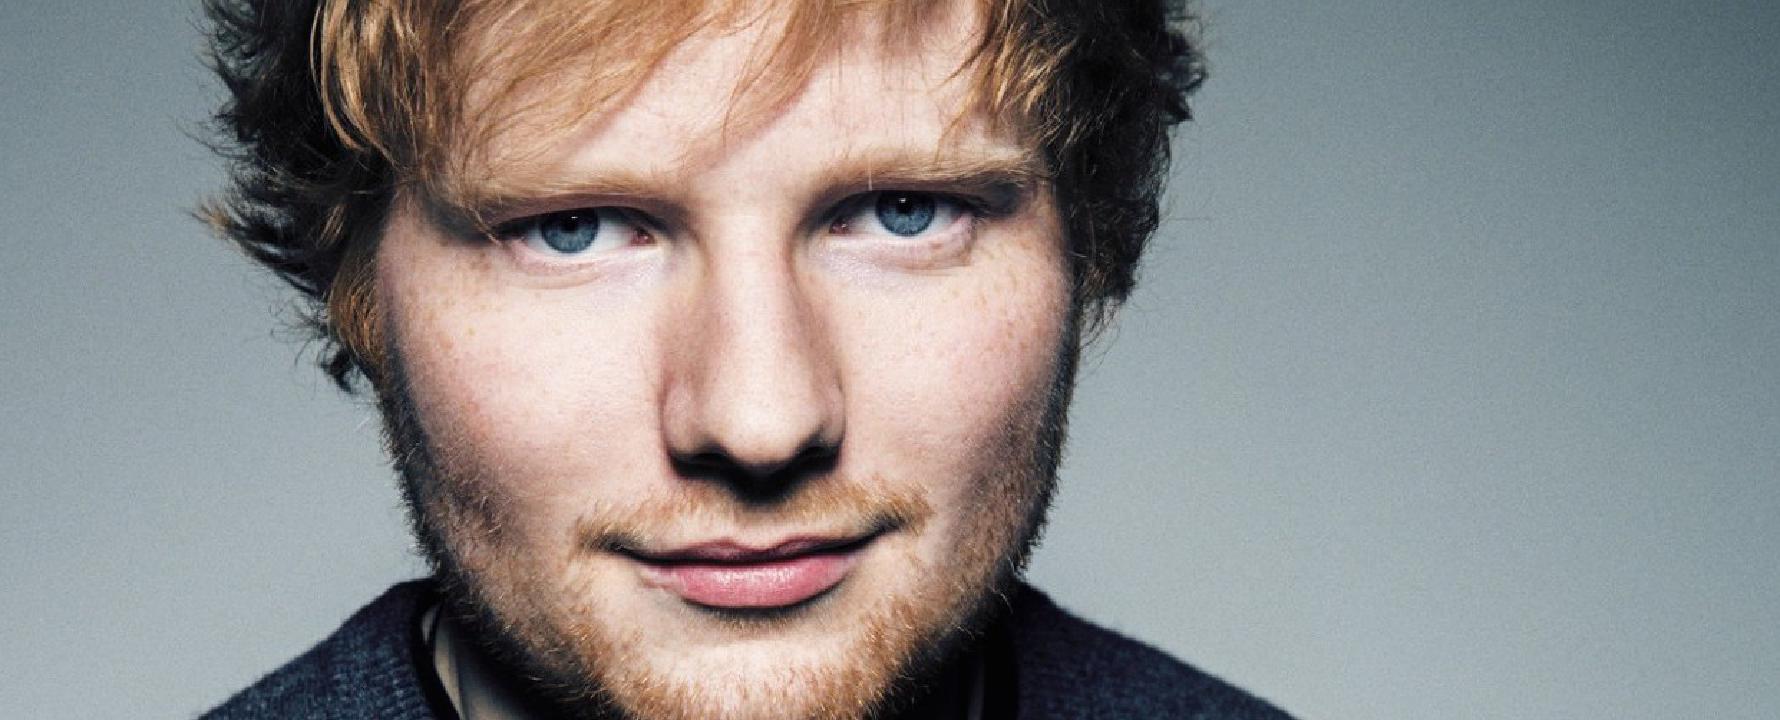 Promotional photograph of Ed Sheeran.